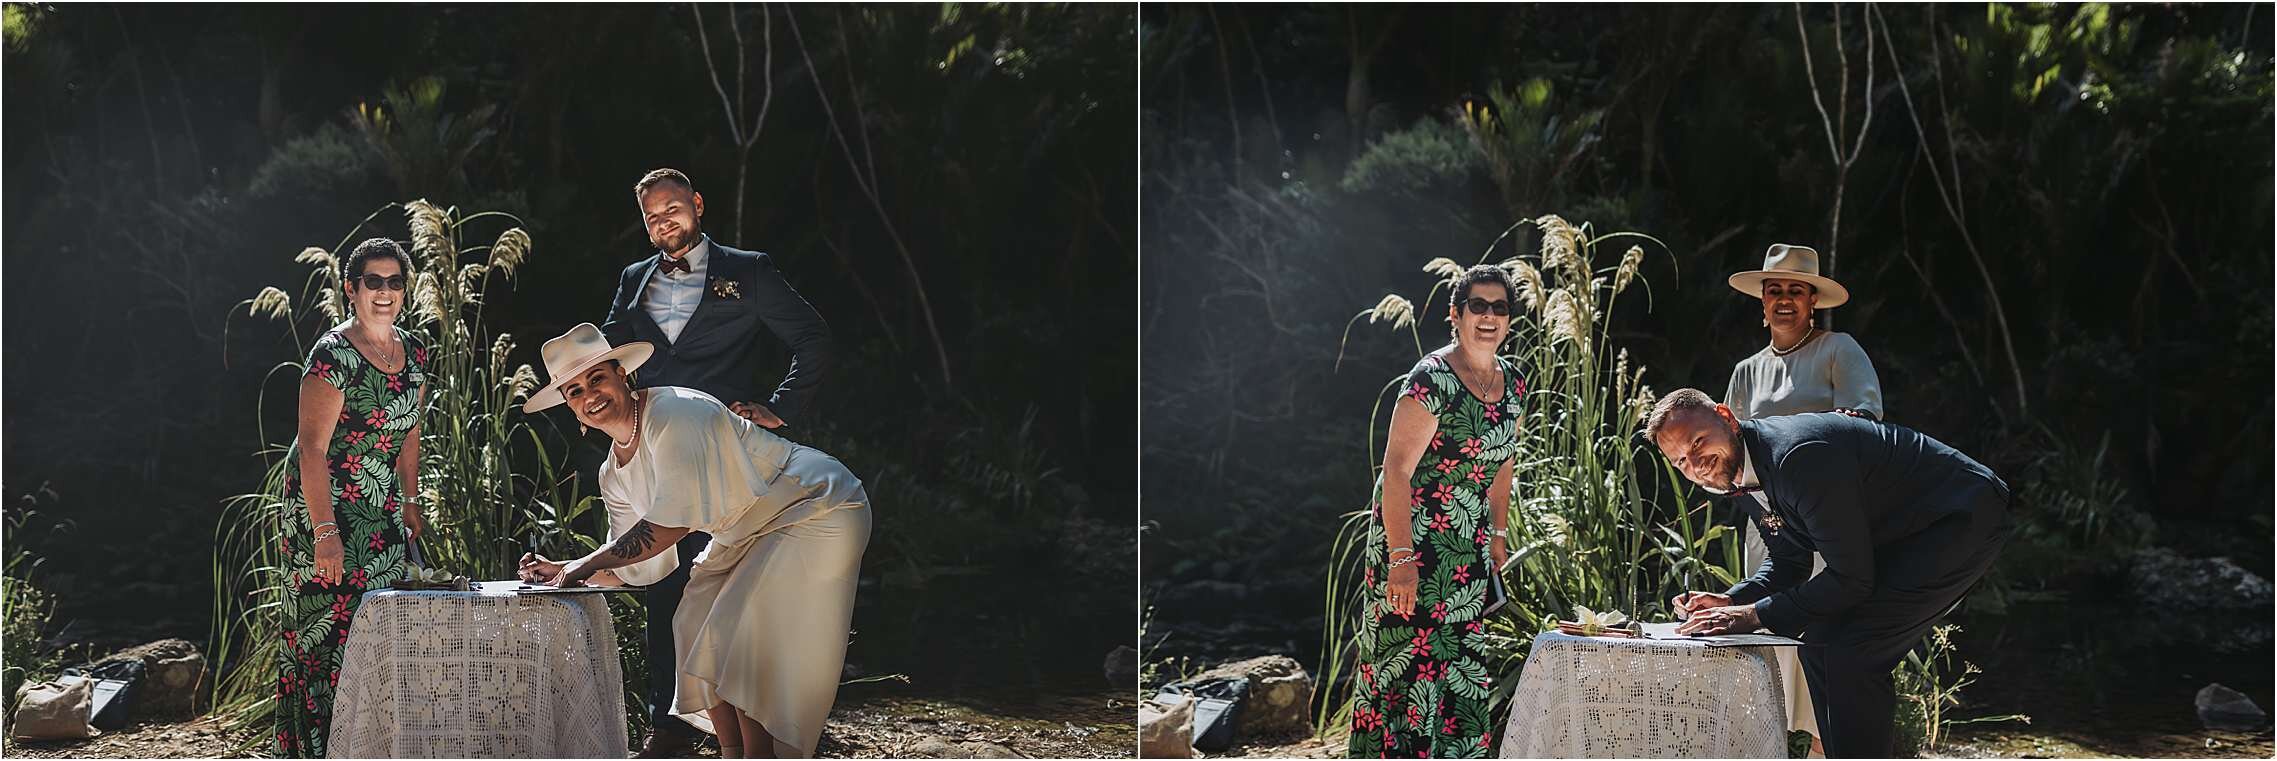 Kouki+Auckland+Wedding+Photographer+New+Zealand+Queenstown+Elopement+Photography_0020.jpg